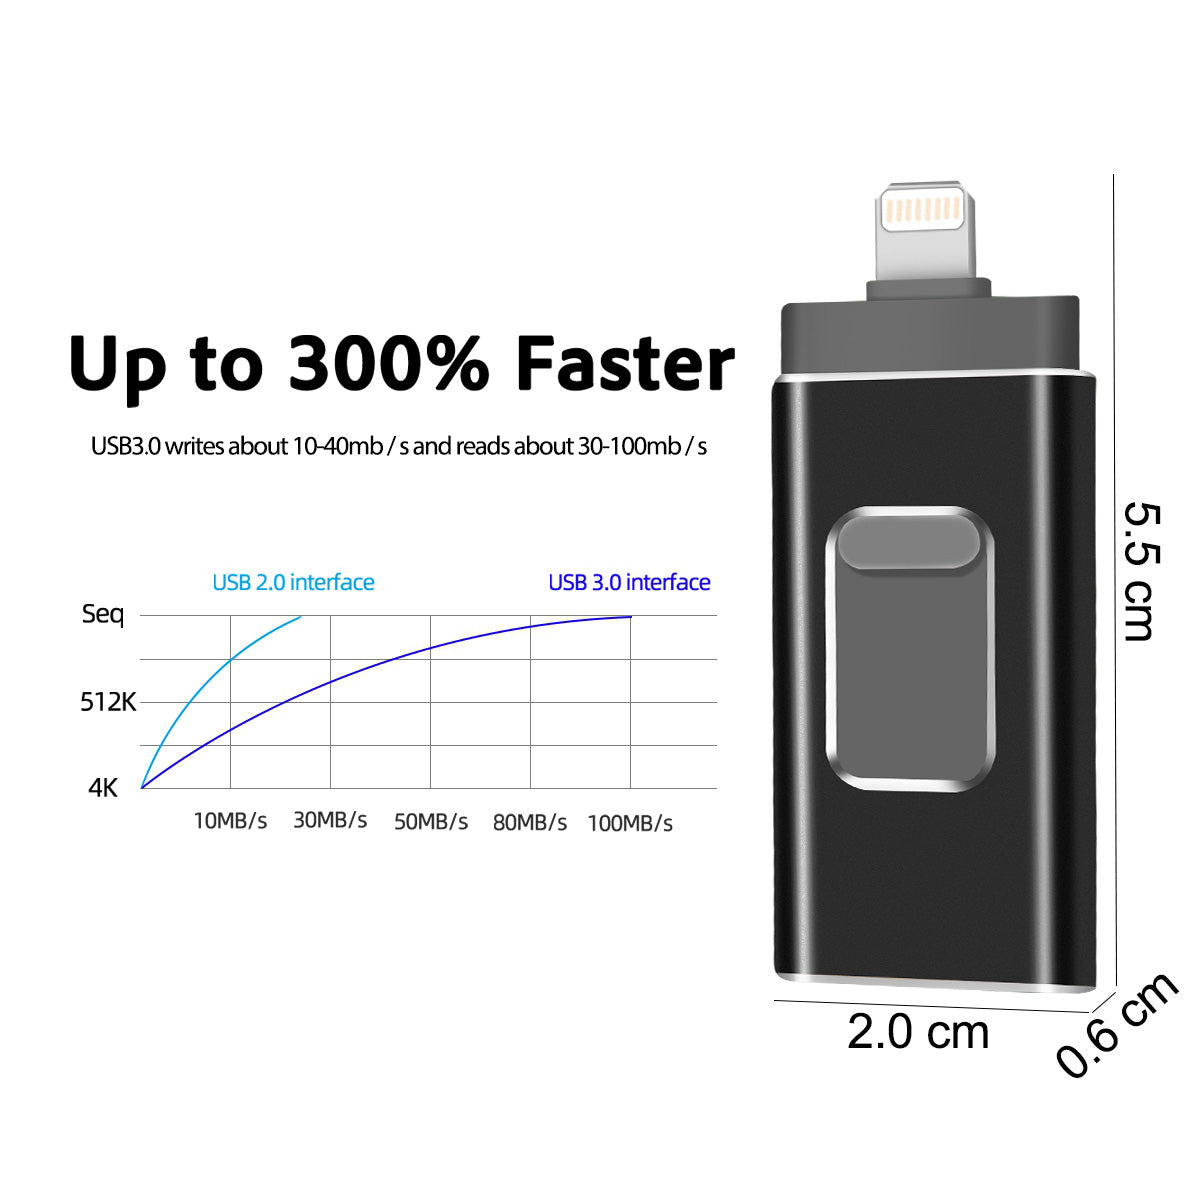 Uniqkart R-01B 32GB USB Memory Stick for iPhone Android PC, Portable USB 3.0 Flash Drive Thumb Drive Photo Stick - Black